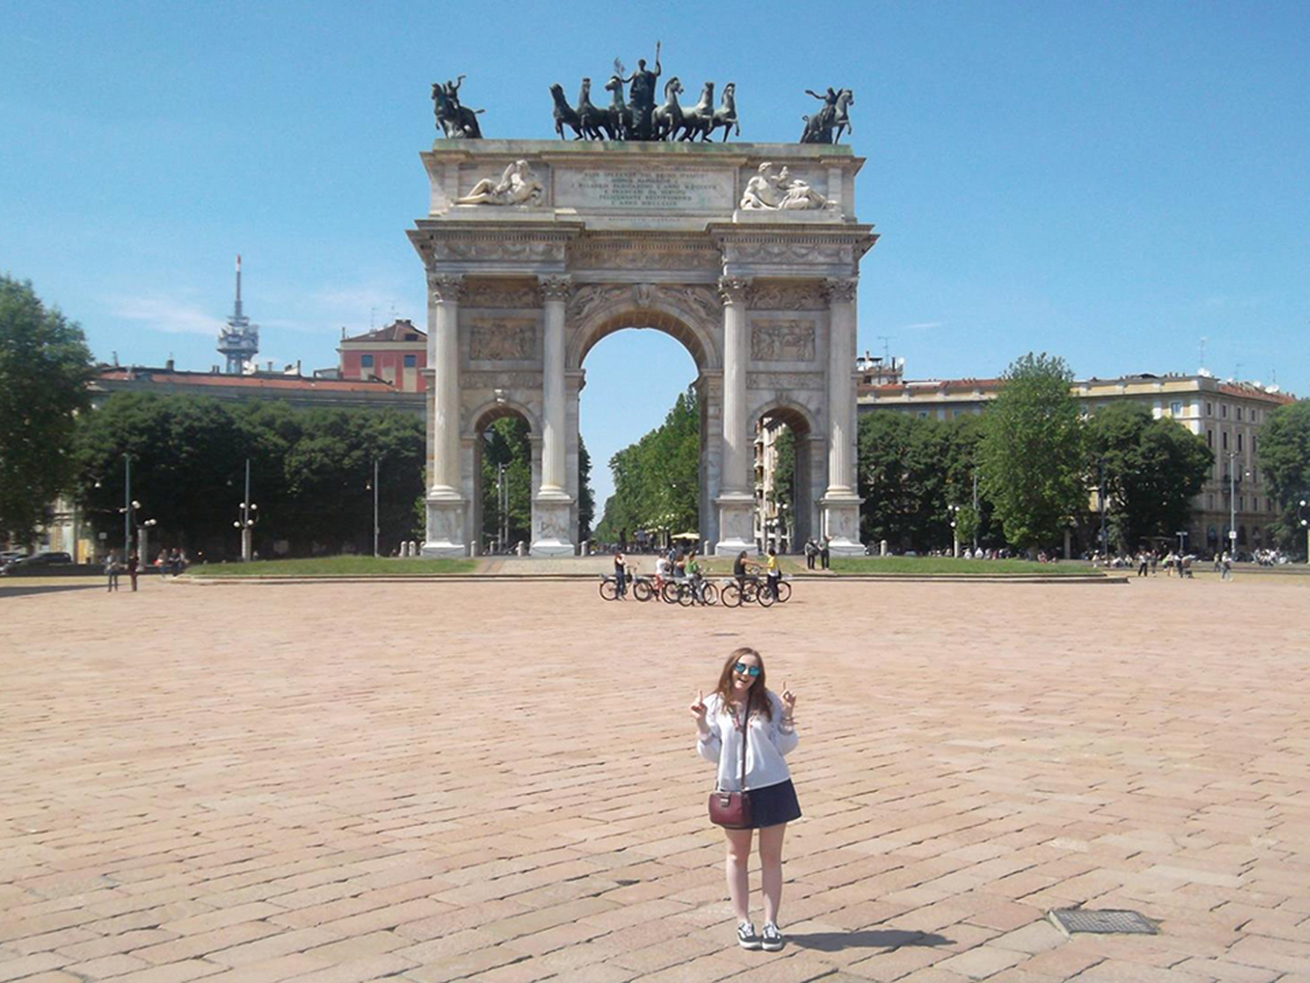 marca sempione, milan gate, castle gardens in milan, things to see in Milan, things to do in Milan